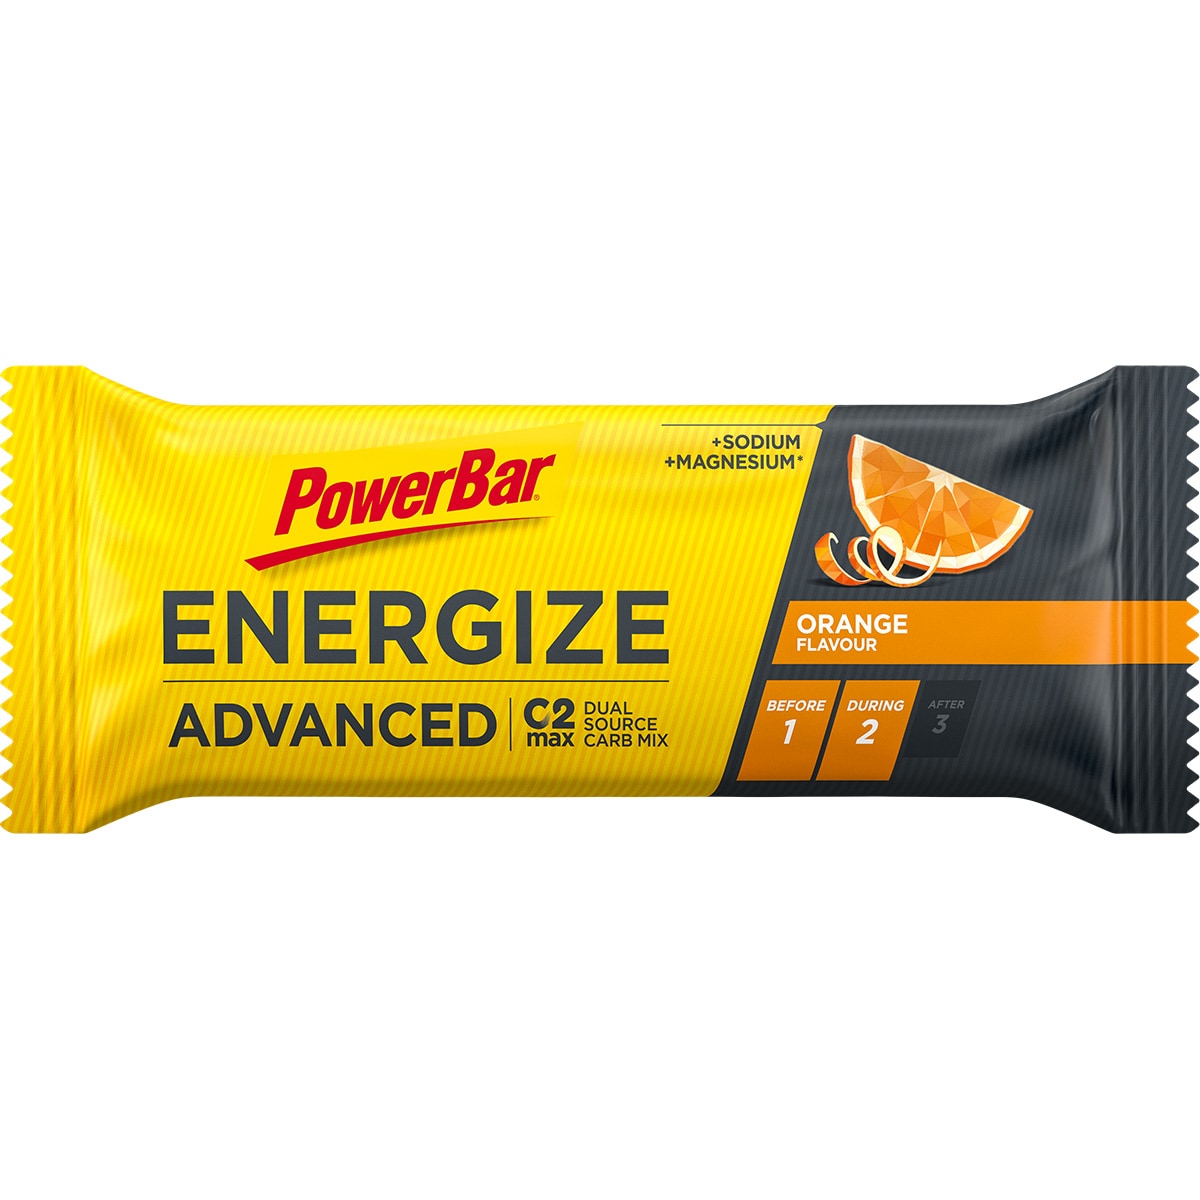 PowerBar Bar, Energize Advanced Bar 55g, Orange